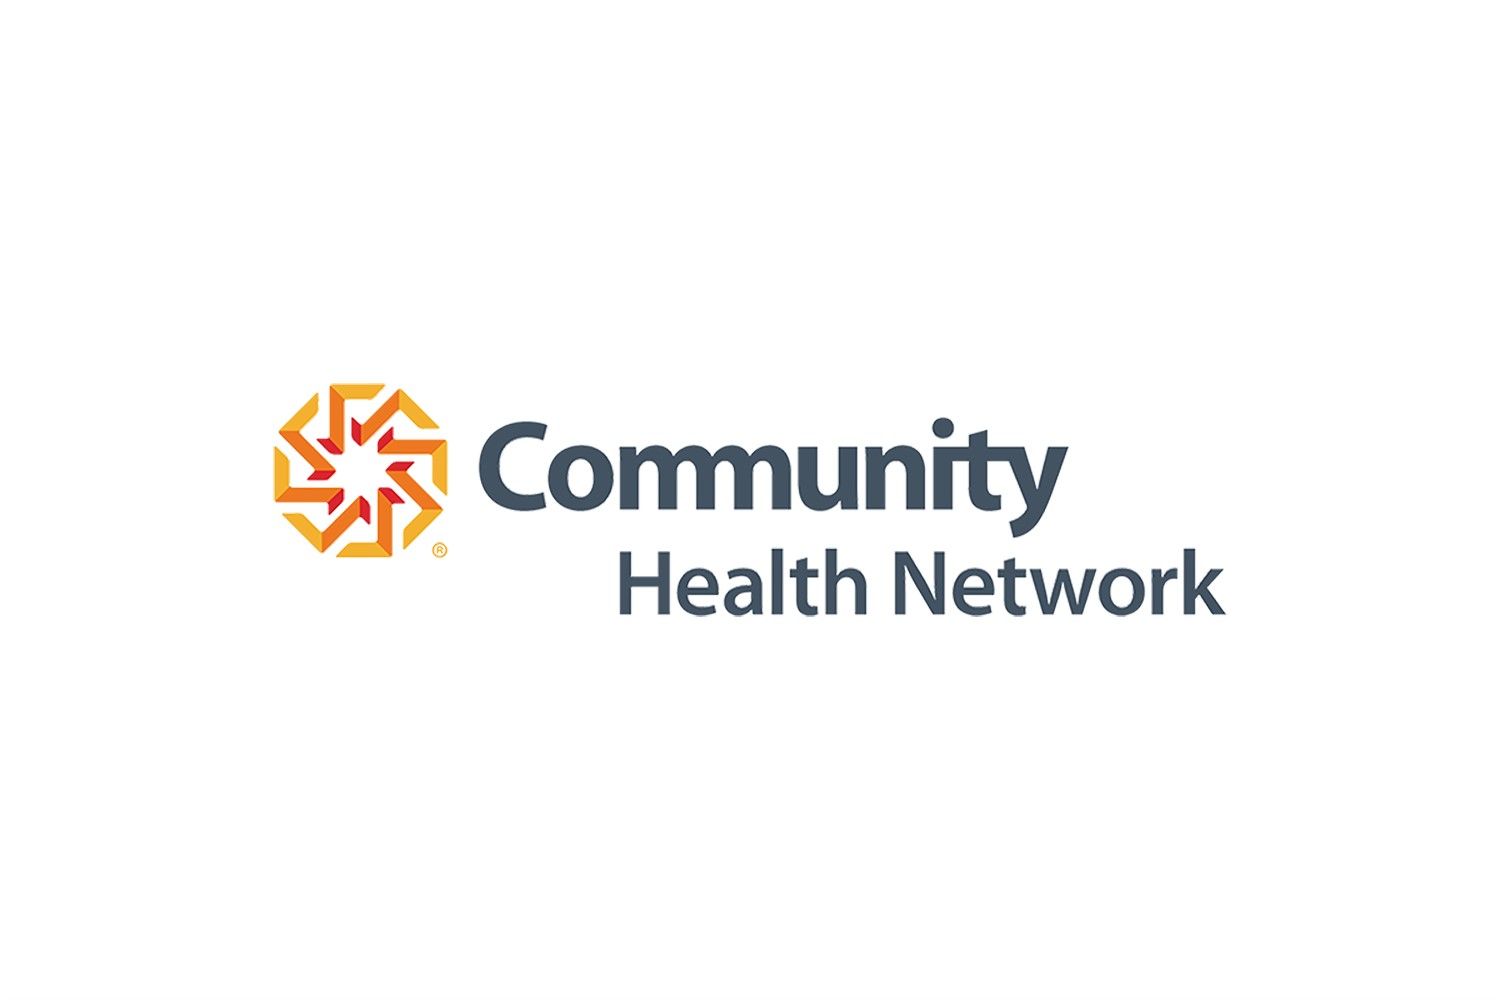 Community Health Network